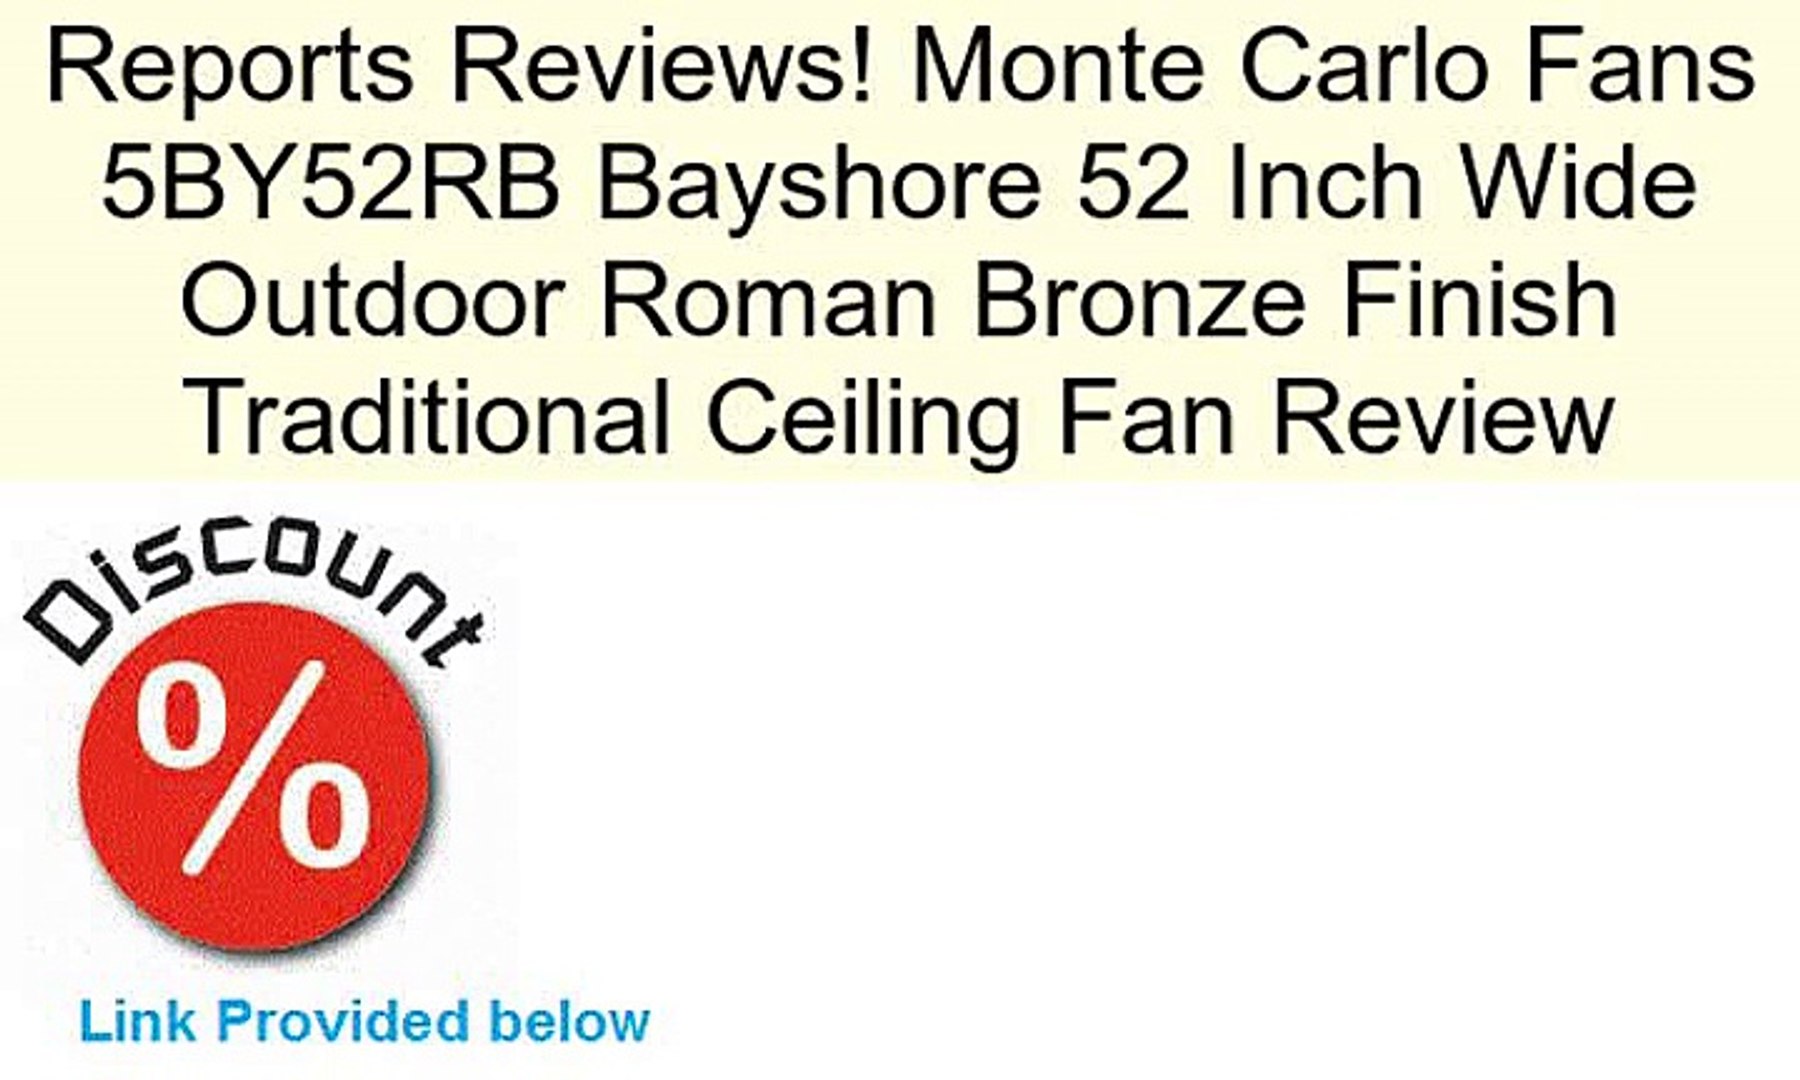 Monte Carlo Fans 5by52rb Bayshore 52 Inch Wide Outdoor Roman